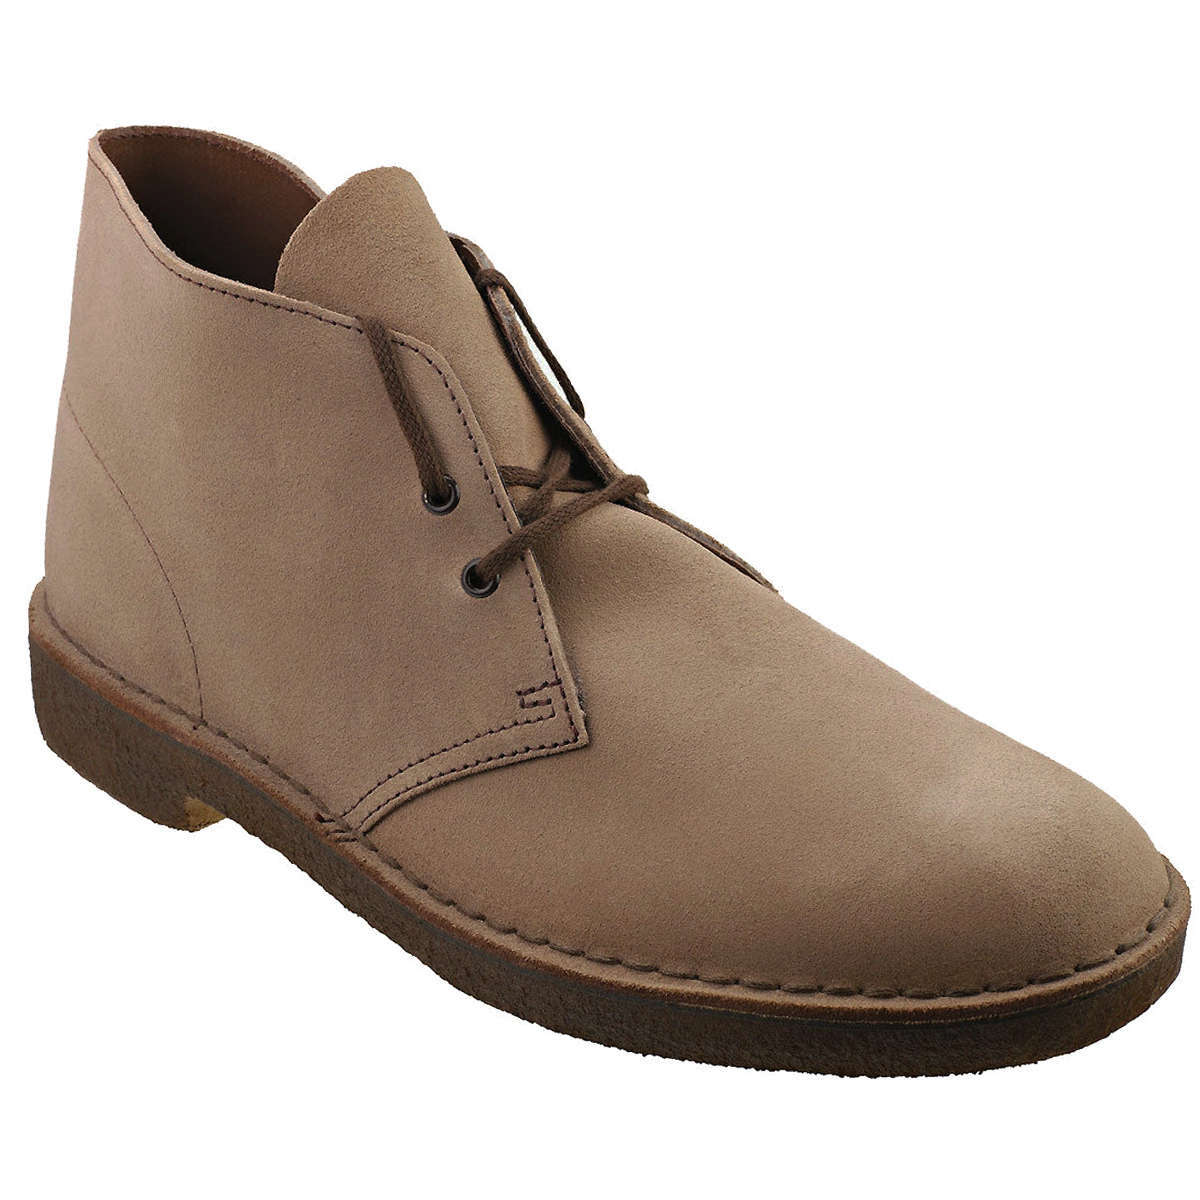 Clarks Originals Desert Boot Suede Leather Men's Boots#color_wolf